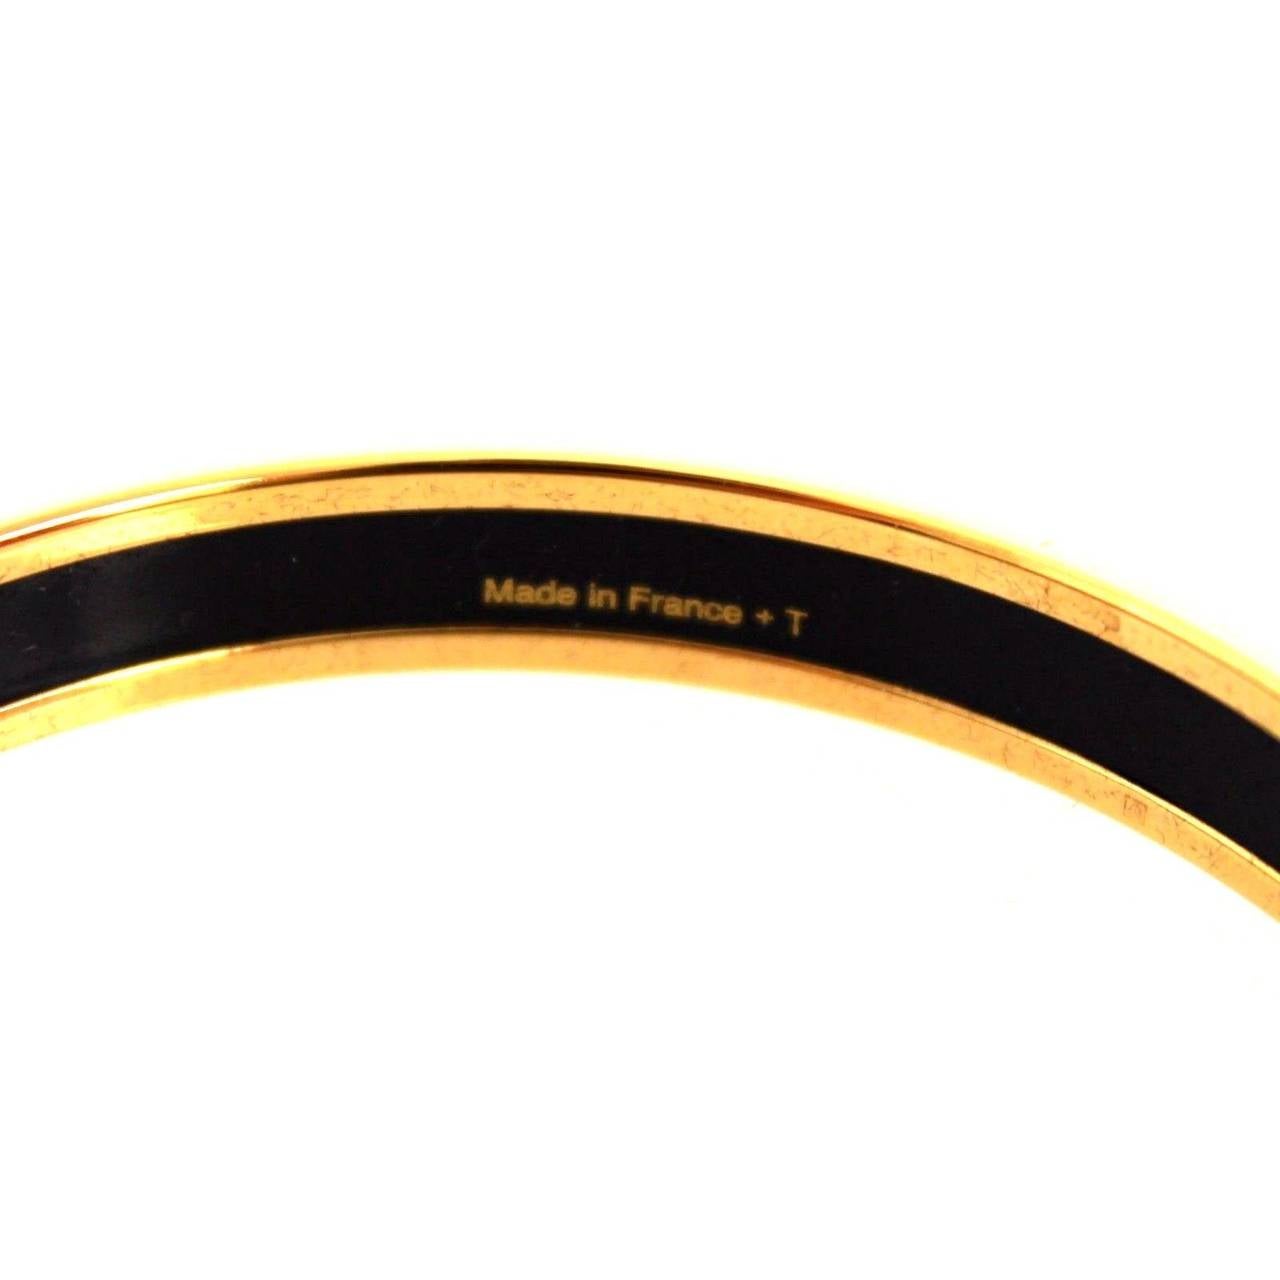 Hermes narrow printed enamel bracelet

Gold plated, 0.5